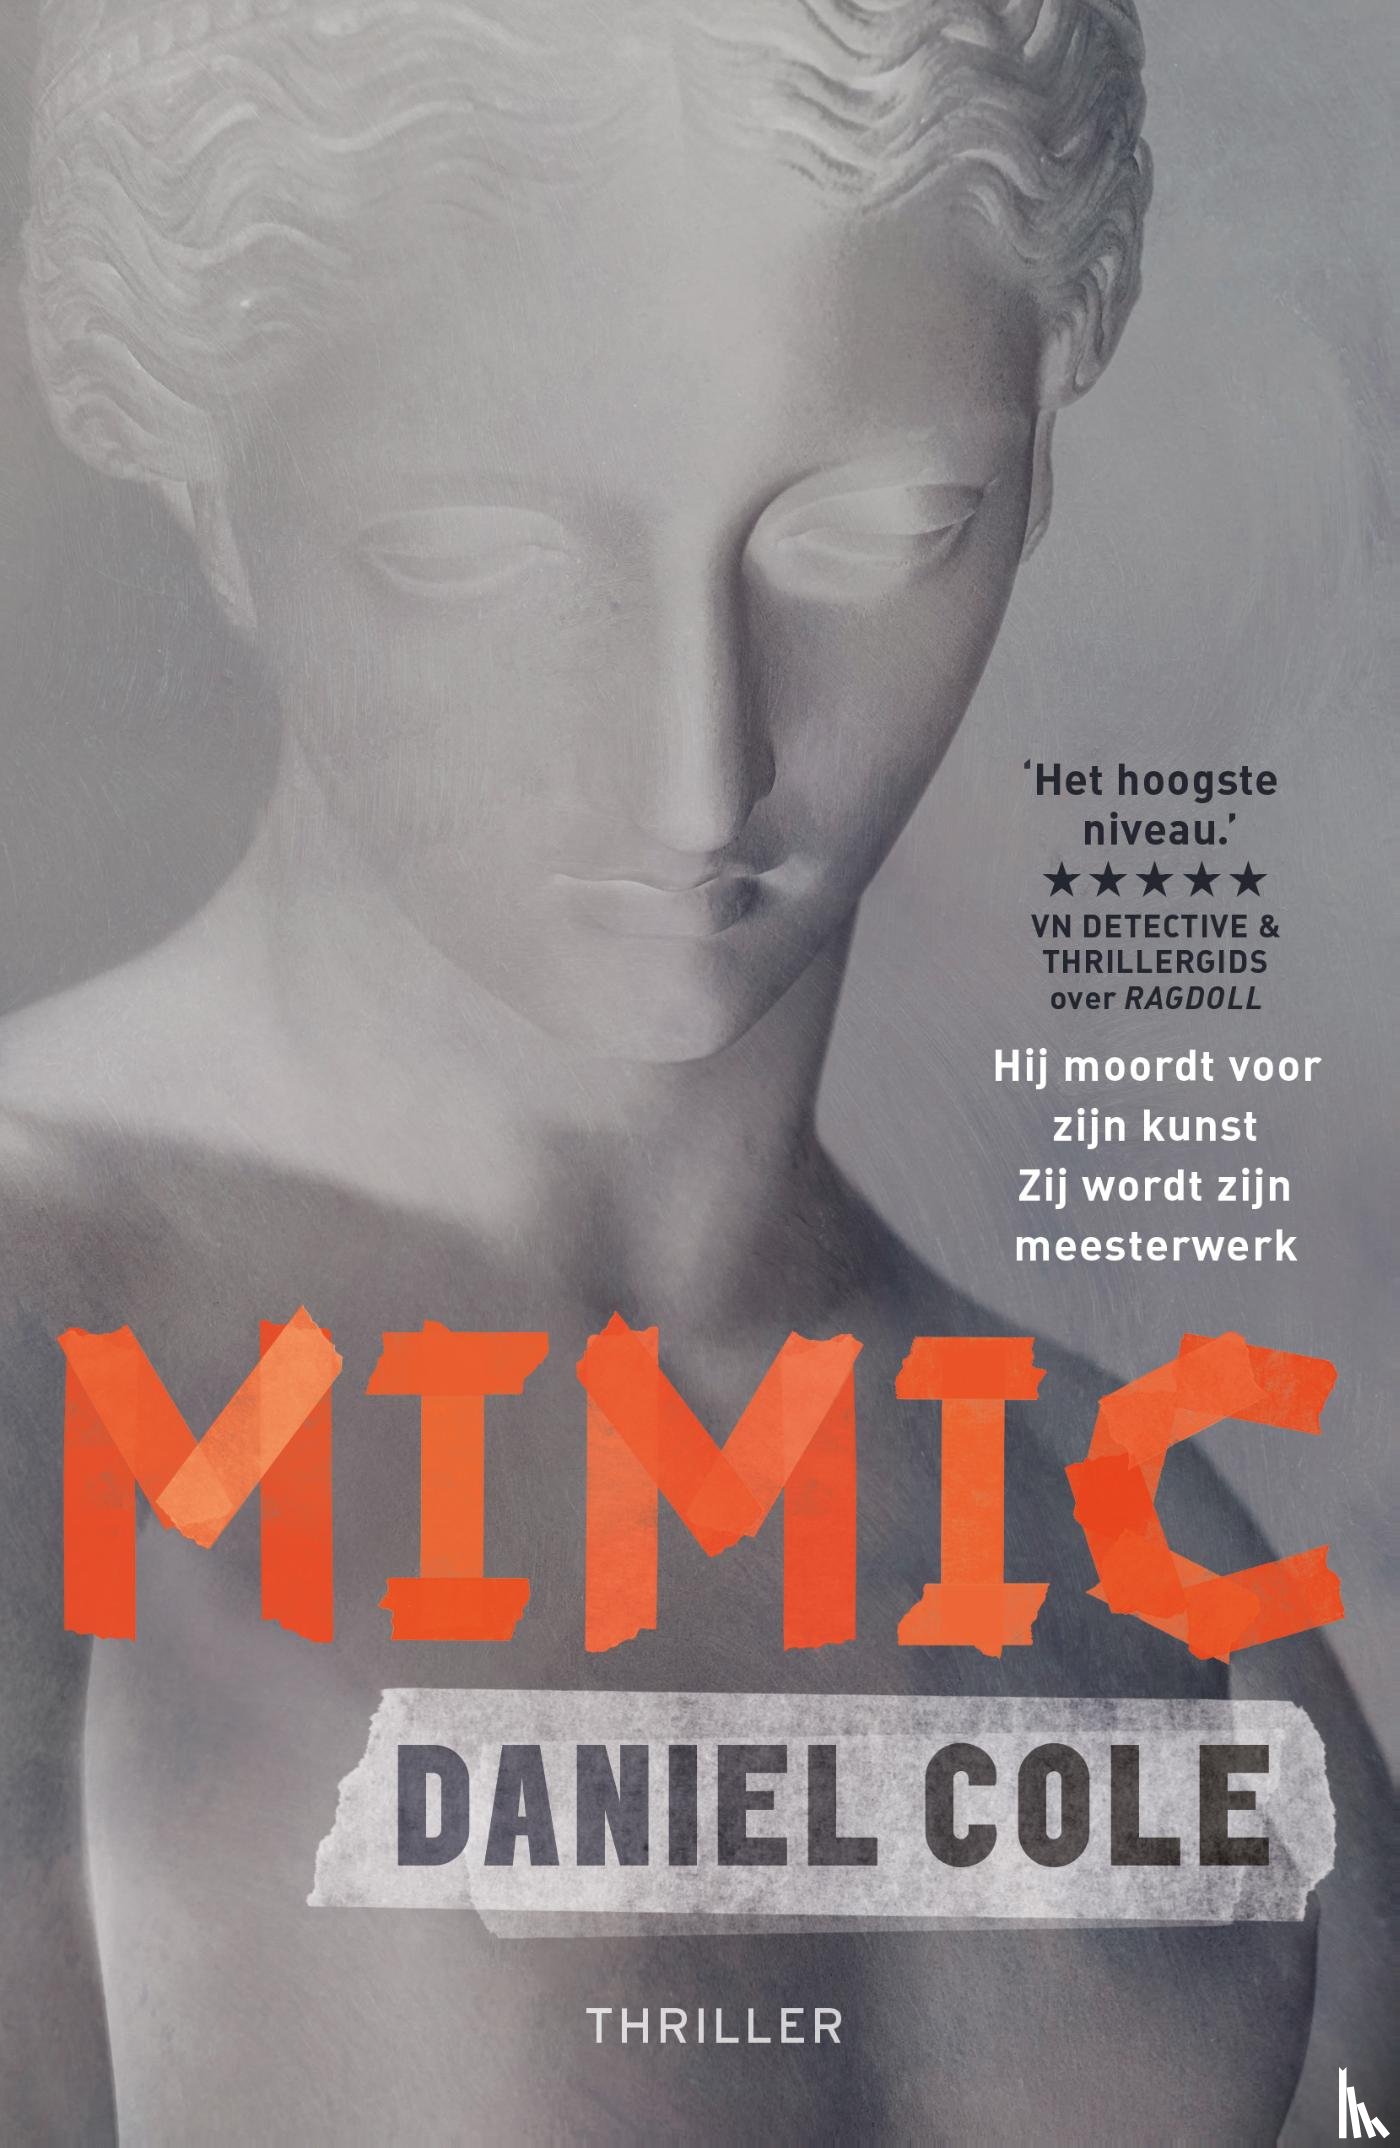 Cole, Daniel - Mimic (MP)